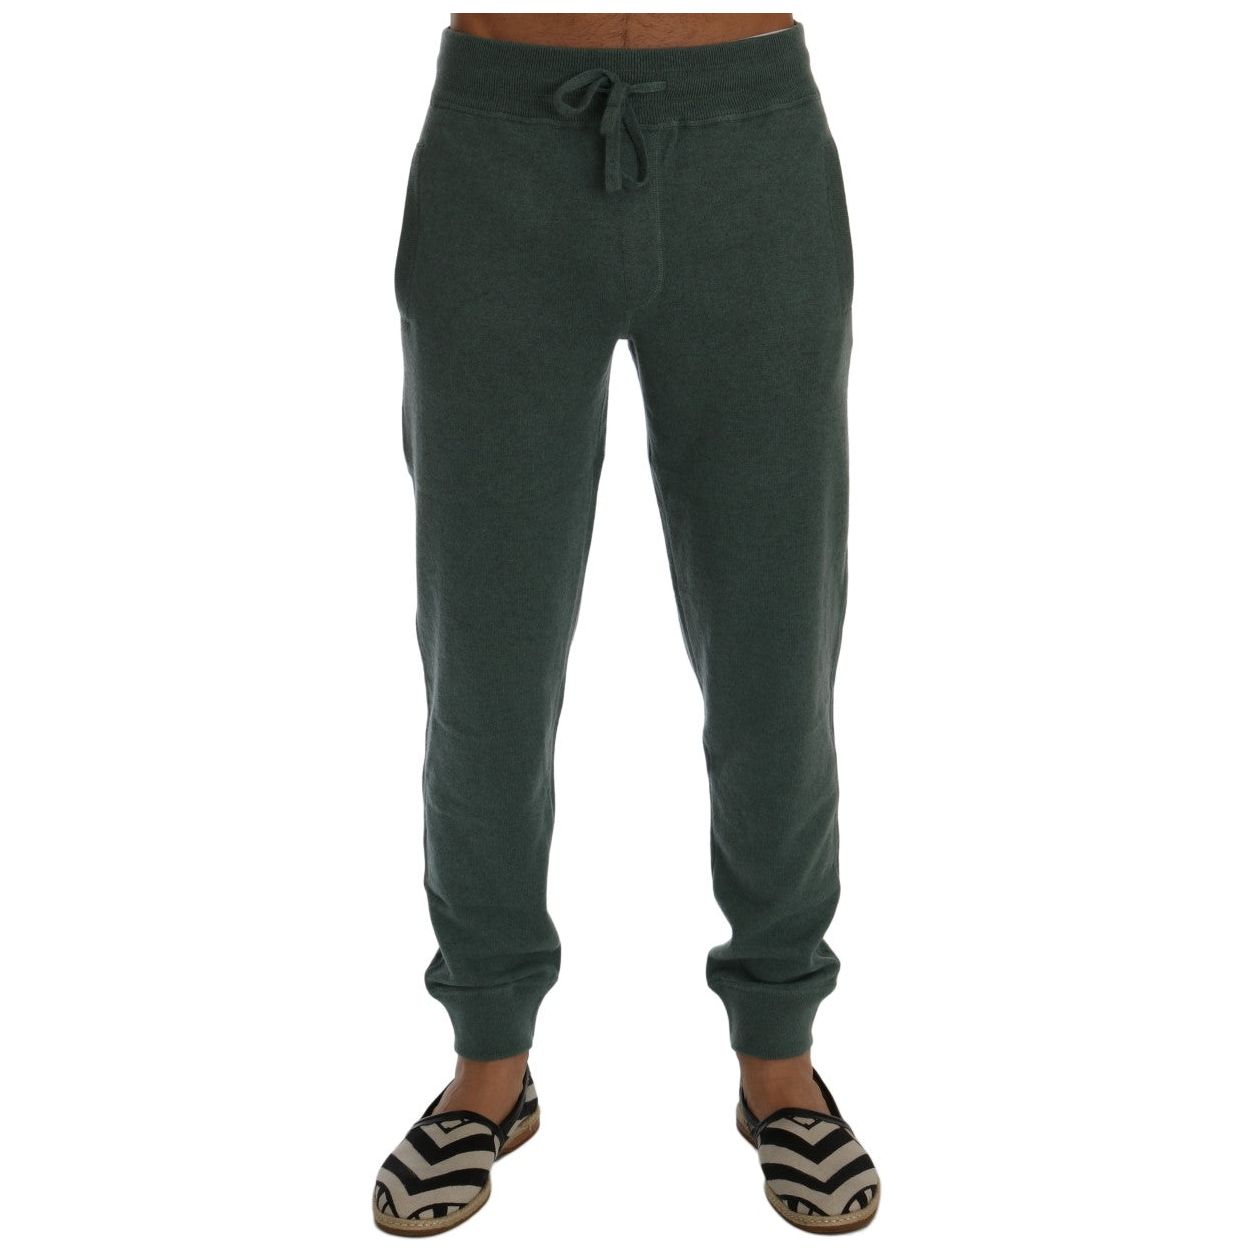 Dolce & Gabbana Elegant Green Cashmere Sport Pants green-cashmere-training-pants 346330-green-cashmere-training-pants.jpg